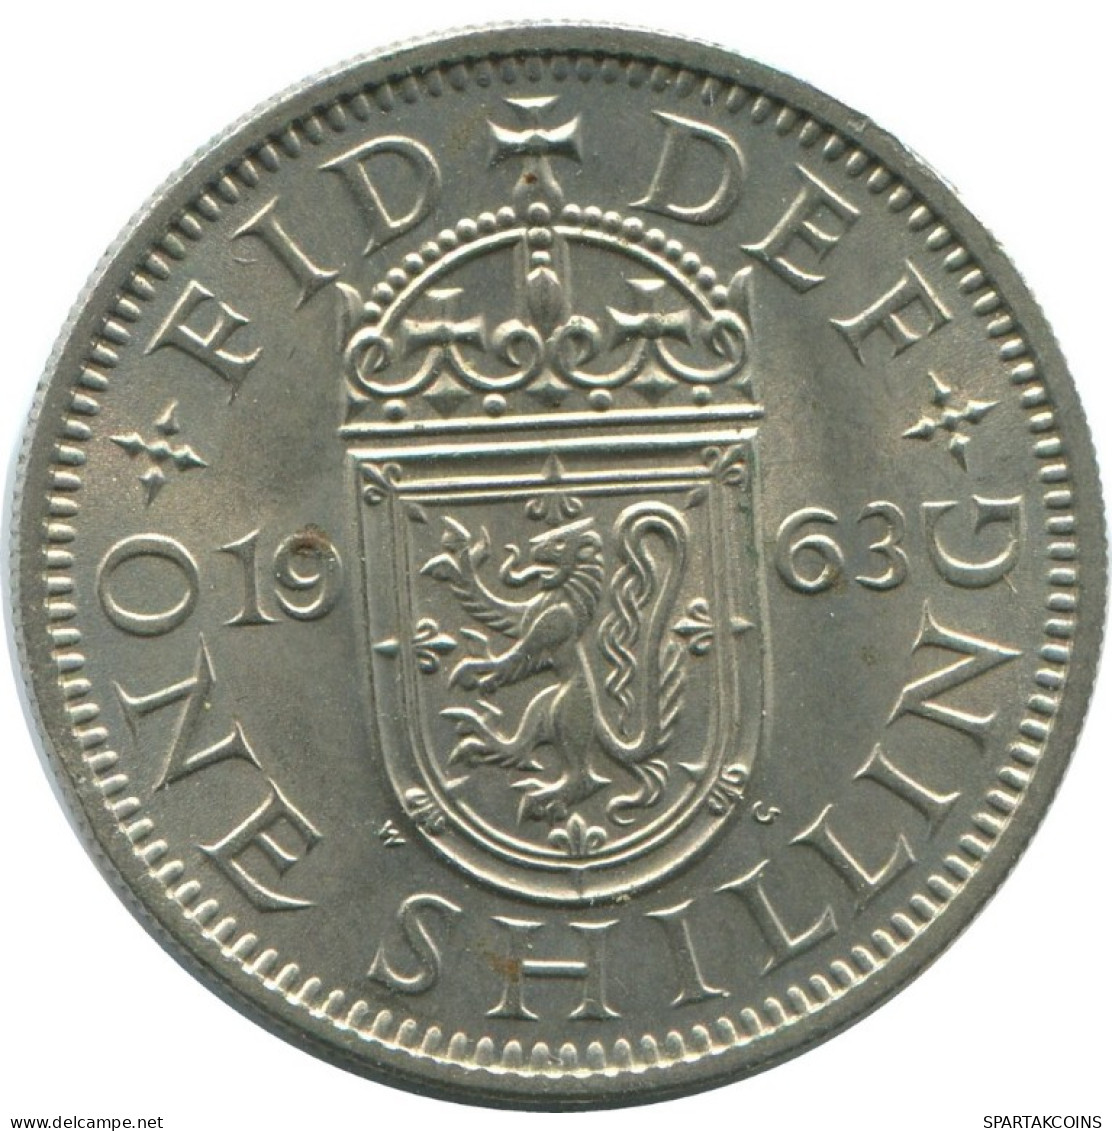 SHILLING 1963 UK GROßBRITANNIEN GREAT BRITAIN Münze #AH001.1.D.A - I. 1 Shilling